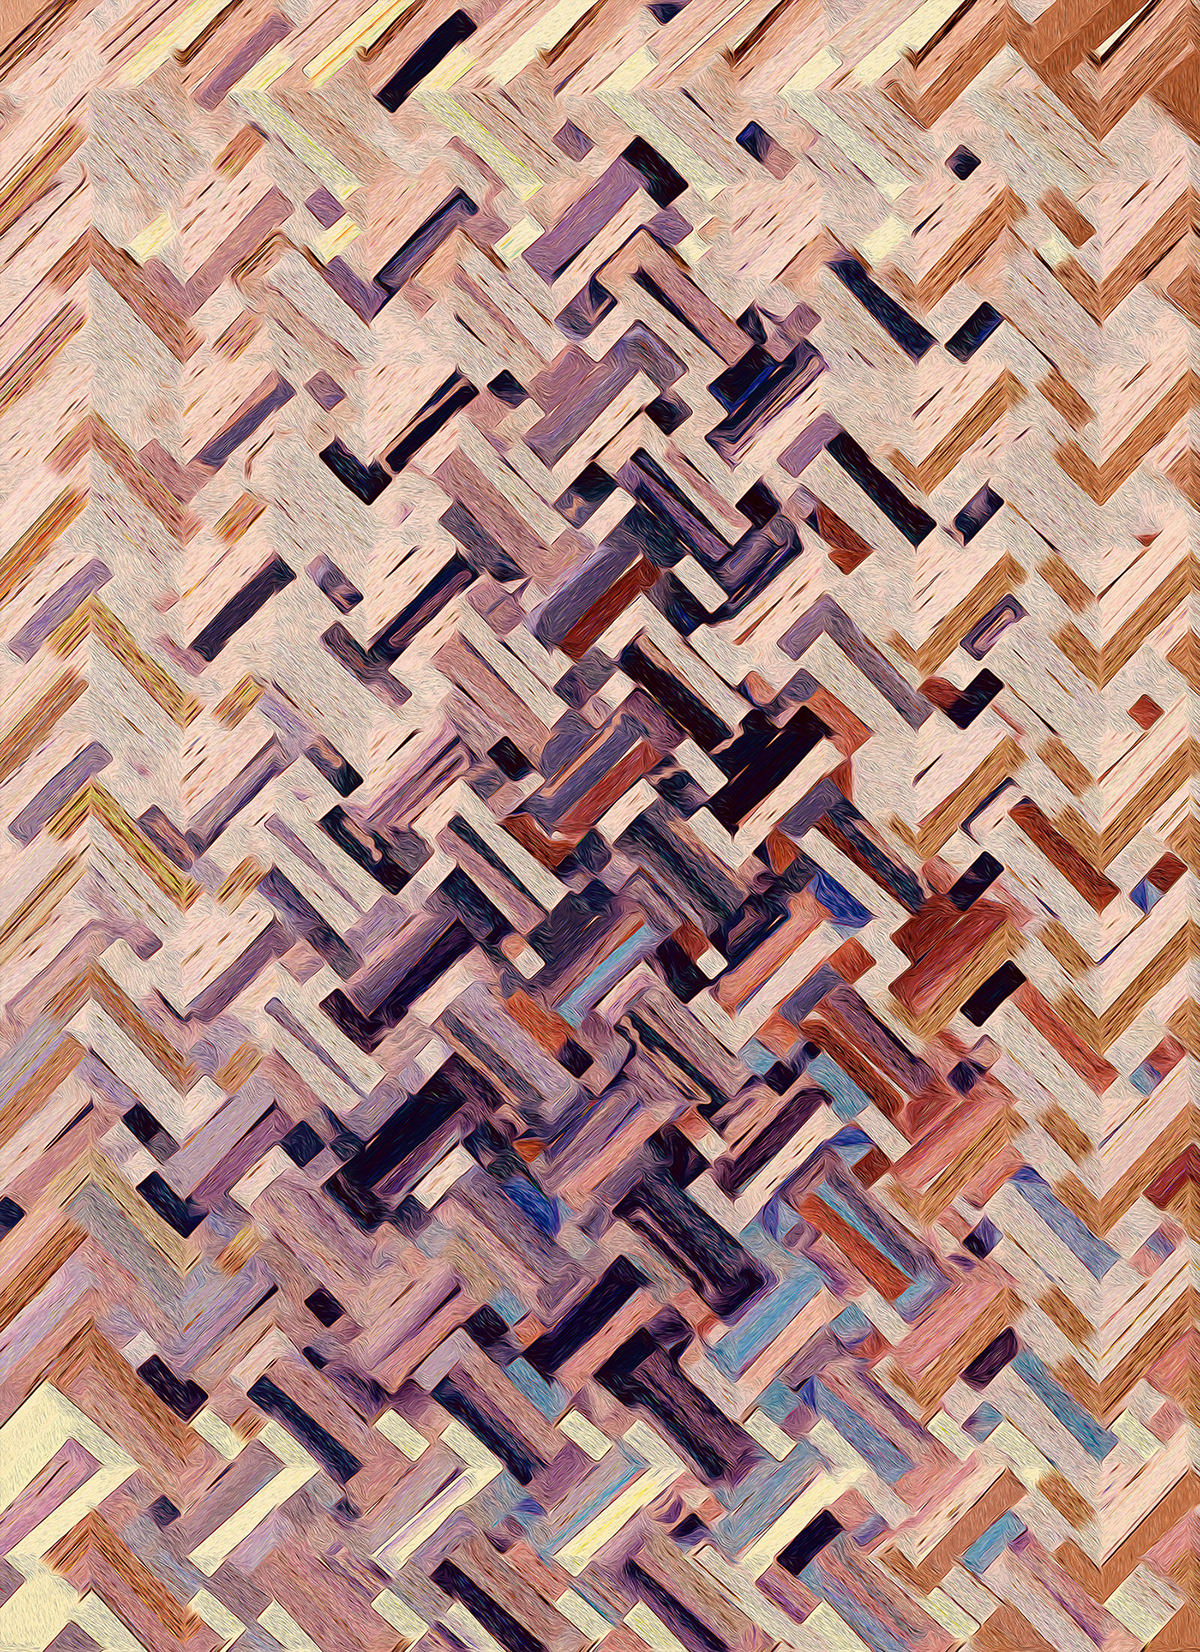 monalisa ceciliagallerani leonardodavinci abstractart contemporaryart abstraction carpet texture Renaissance portrait